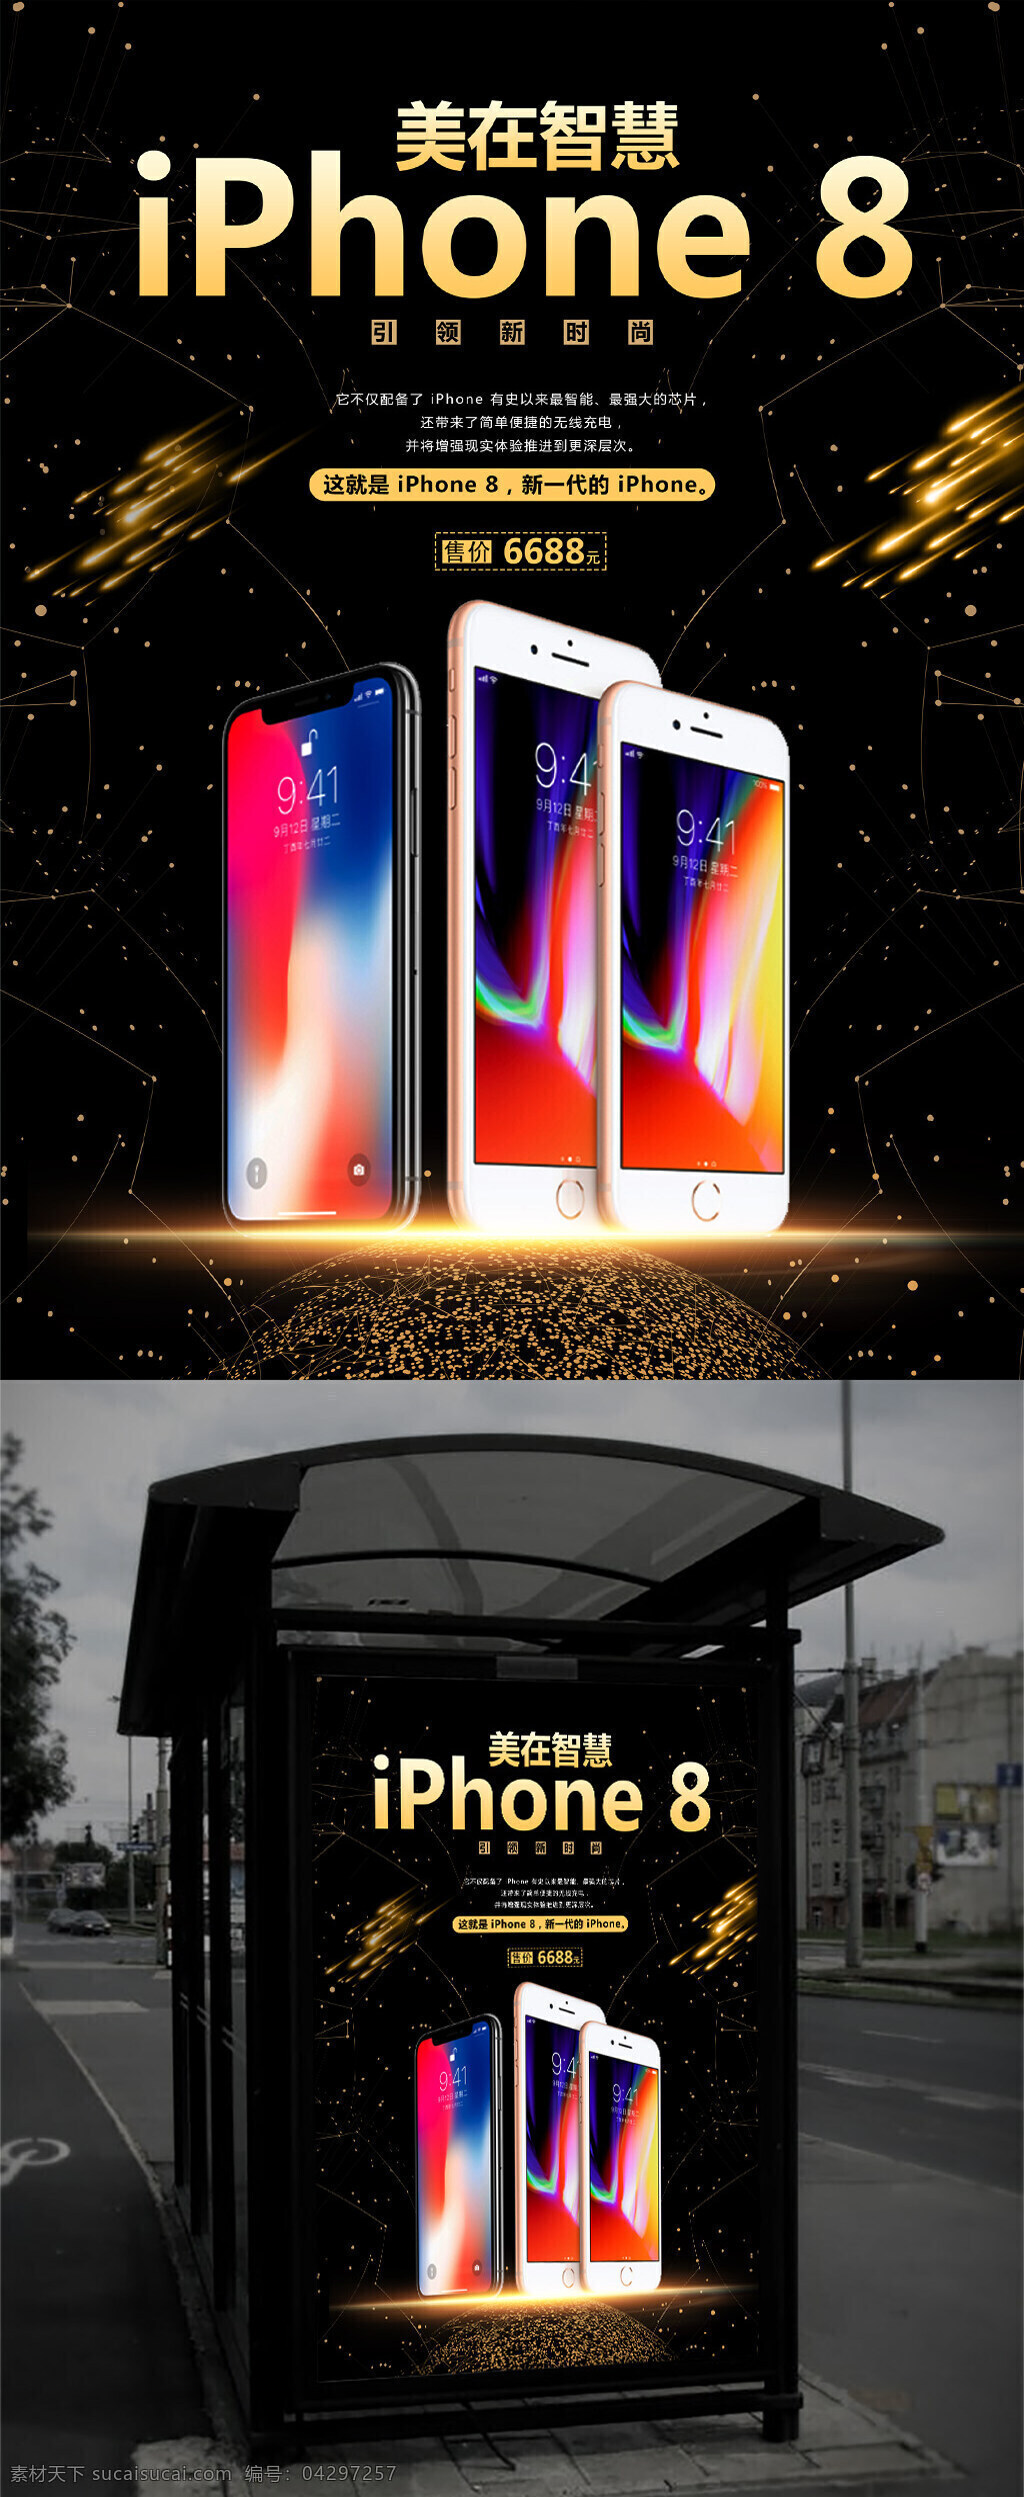 iphone8 手机 促销 海报 苹果 样机 iphonex 苹果x手机 苹果8海报 宣传海报 苹果宣传海报